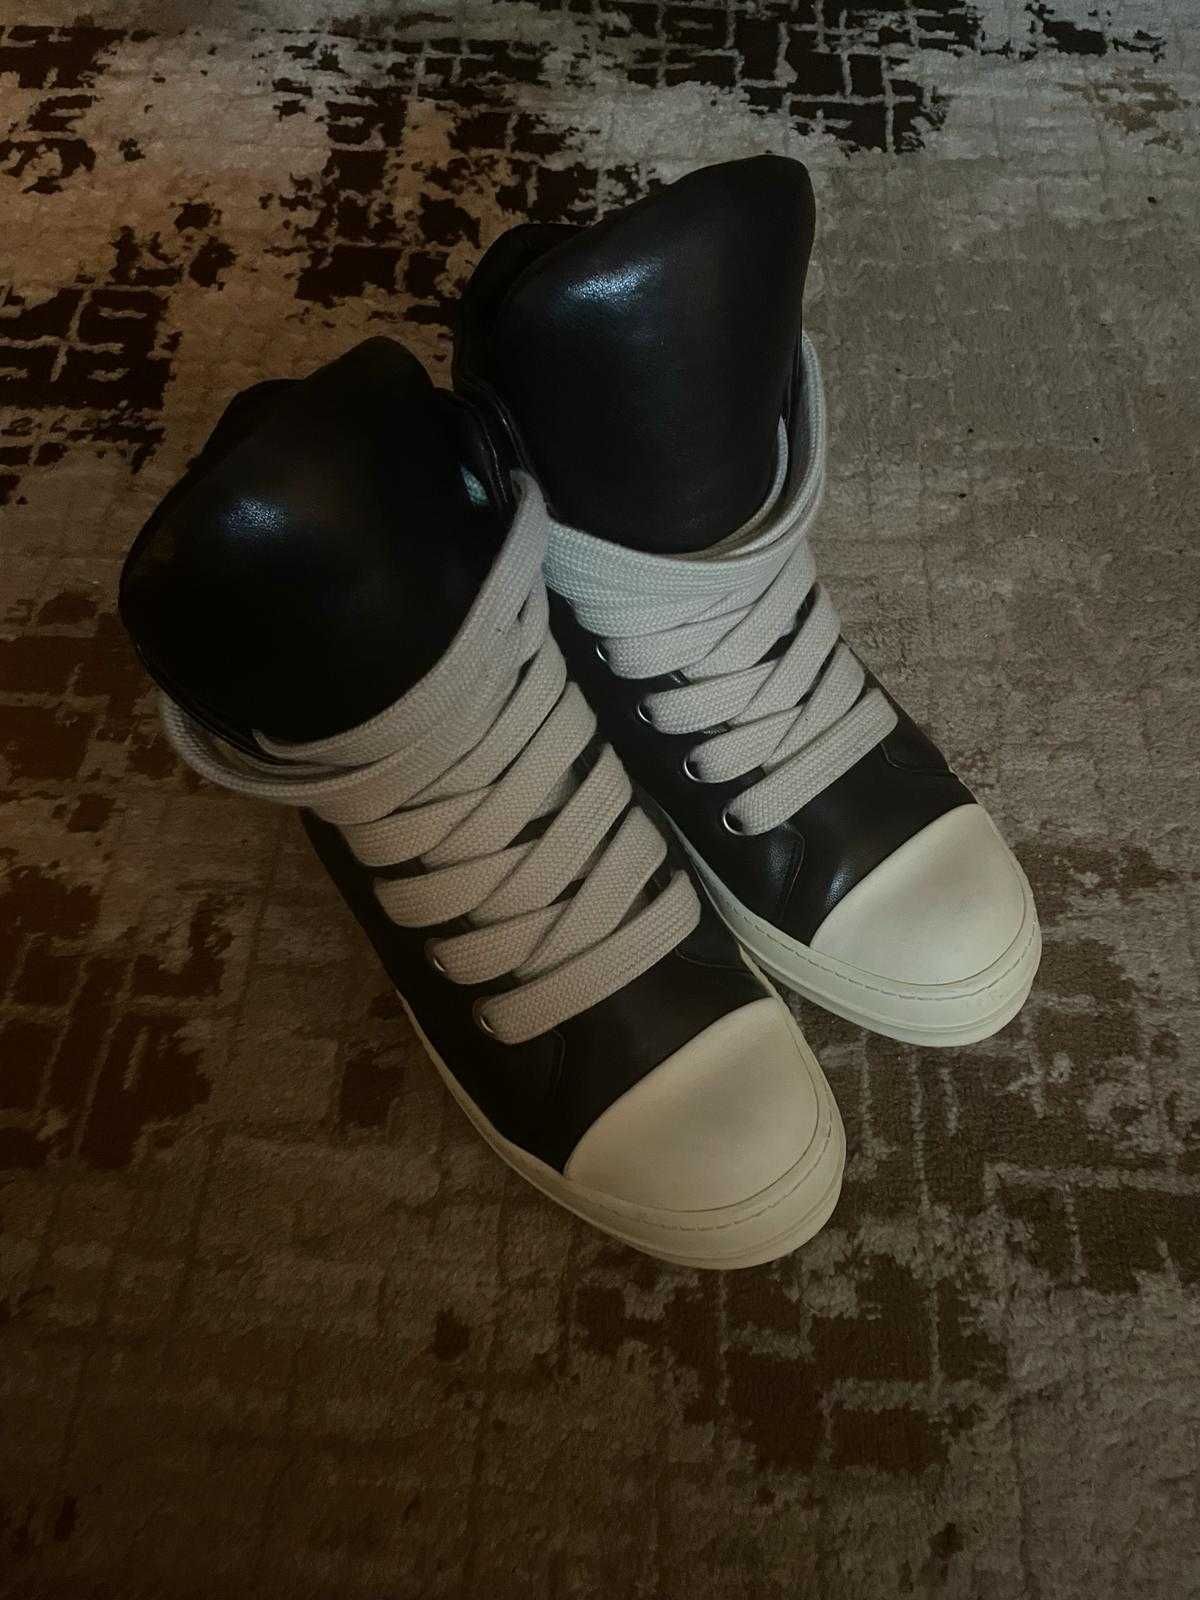 Rick Owens
Jumbo padded leather sneakers